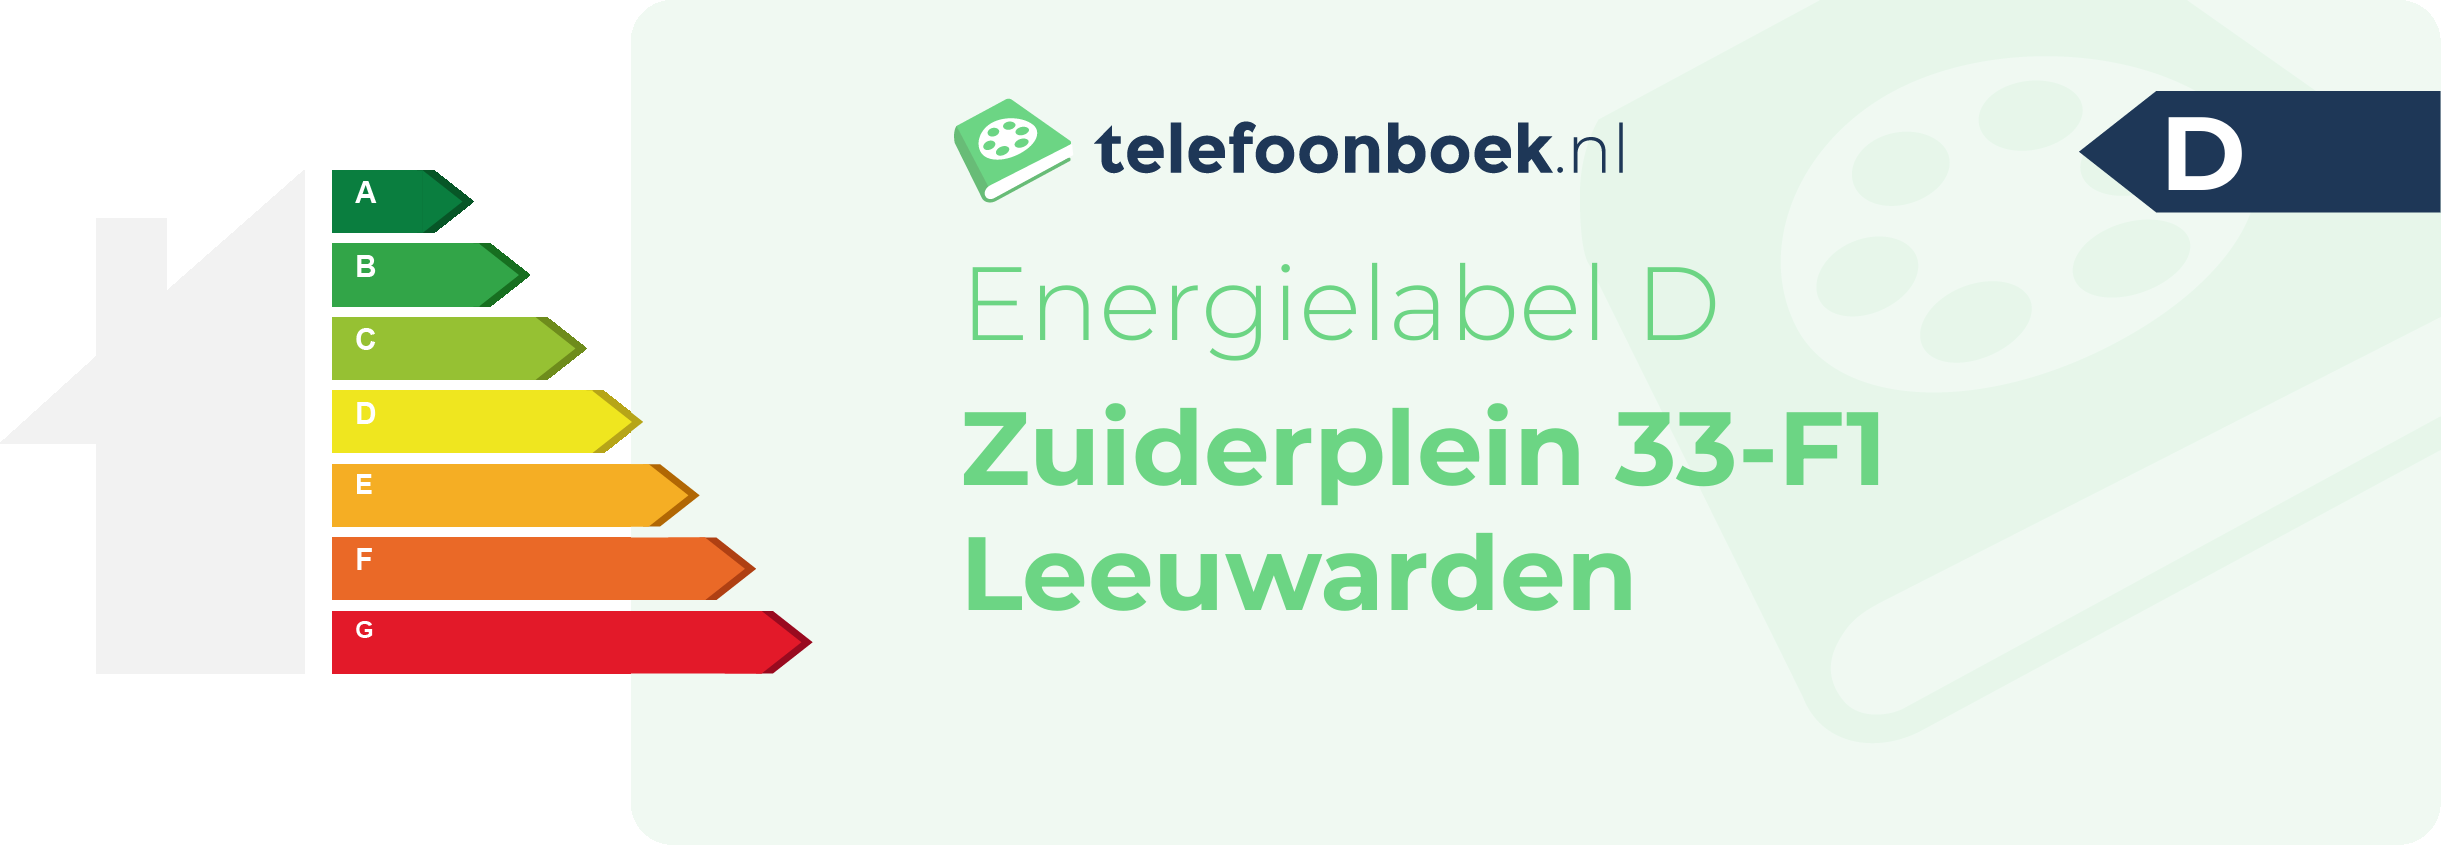 Energielabel Zuiderplein 33-F1 Leeuwarden